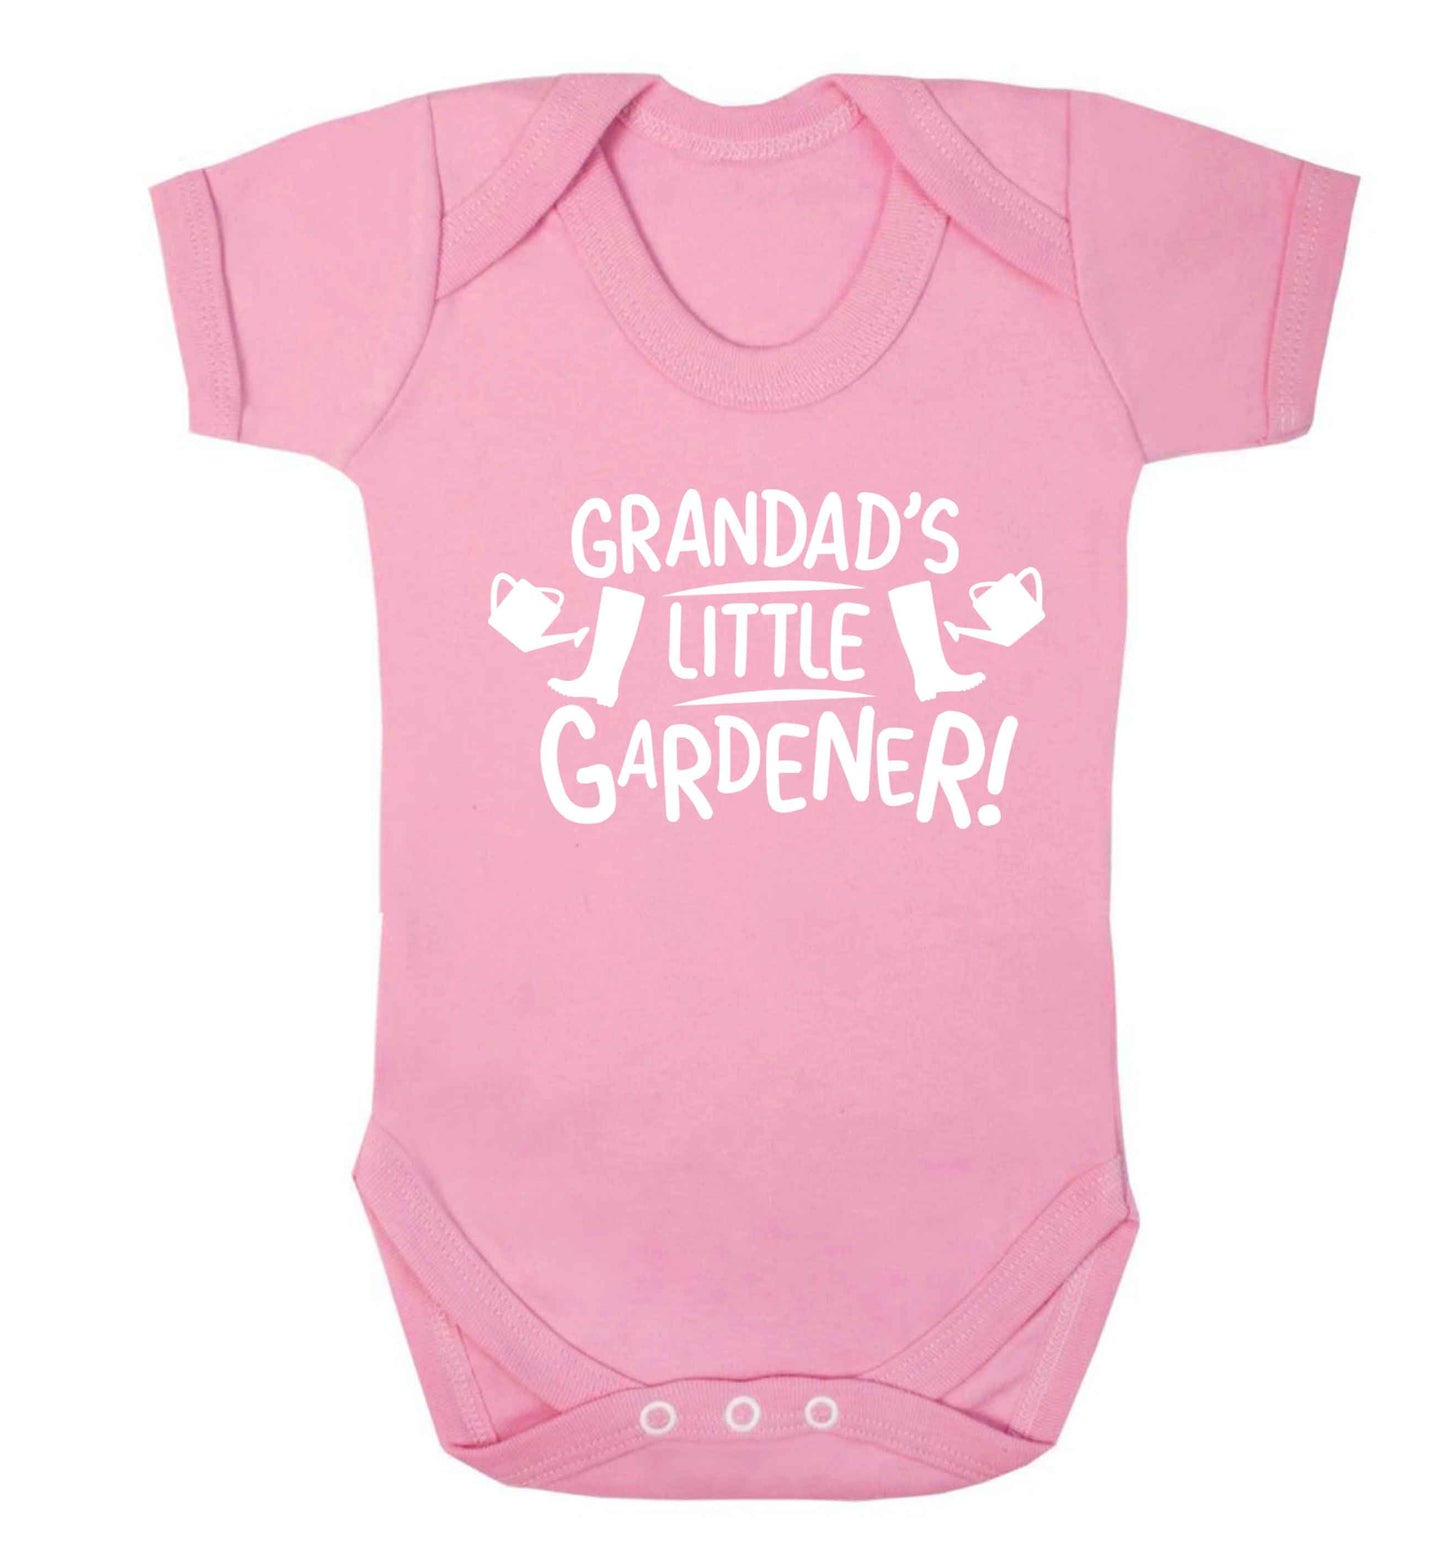 Grandad's little gardener Baby Vest pale pink 18-24 months